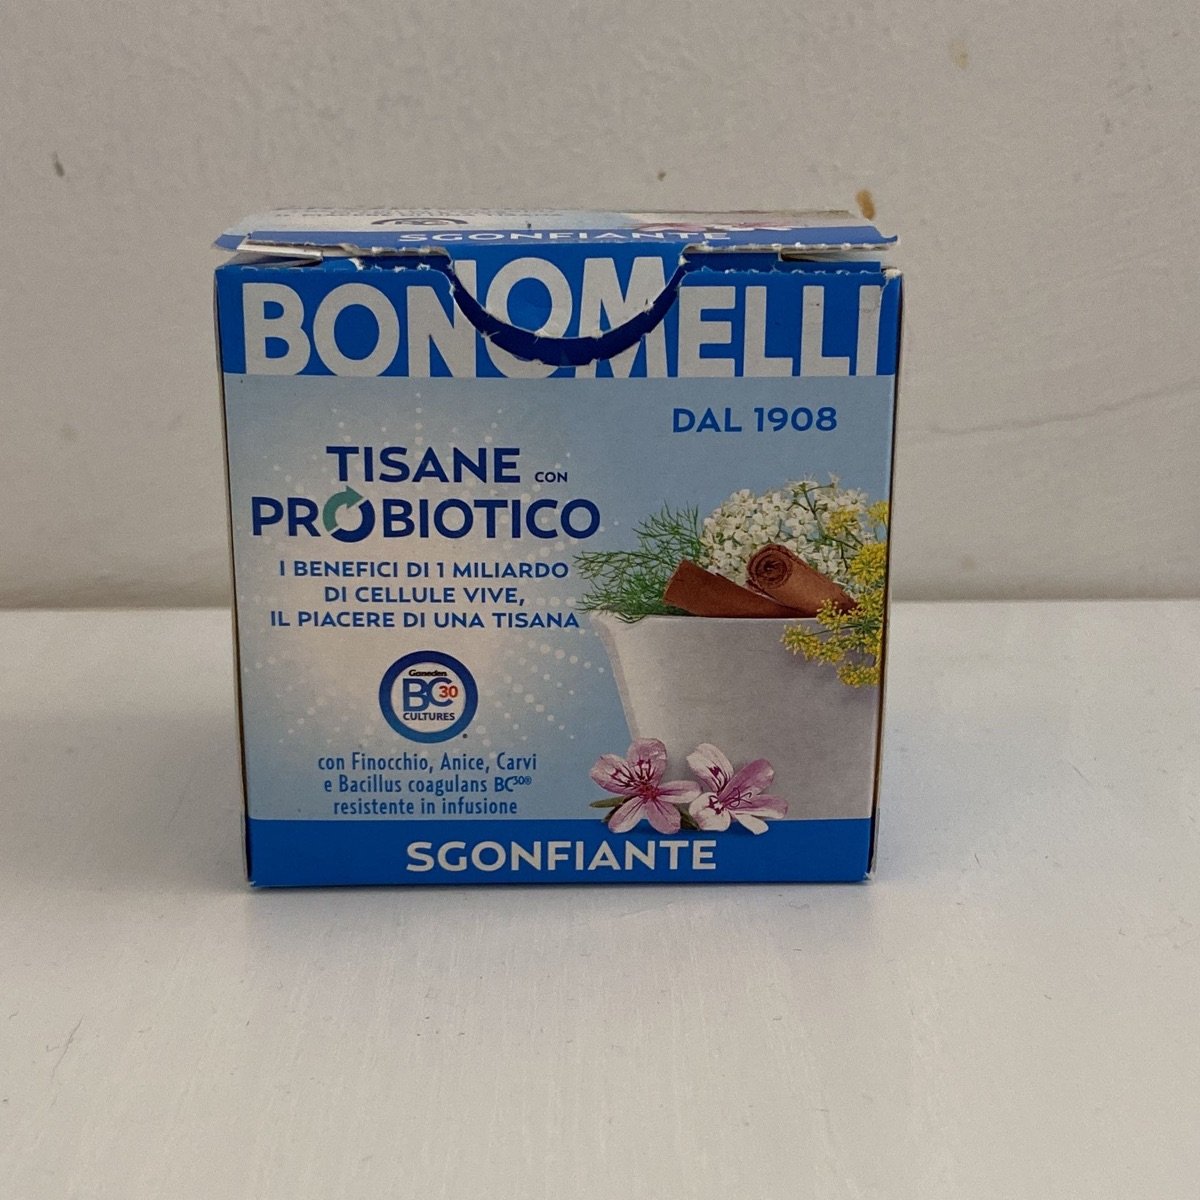 Bonomelli Tisane con probiotico - sgonfiante Reviews